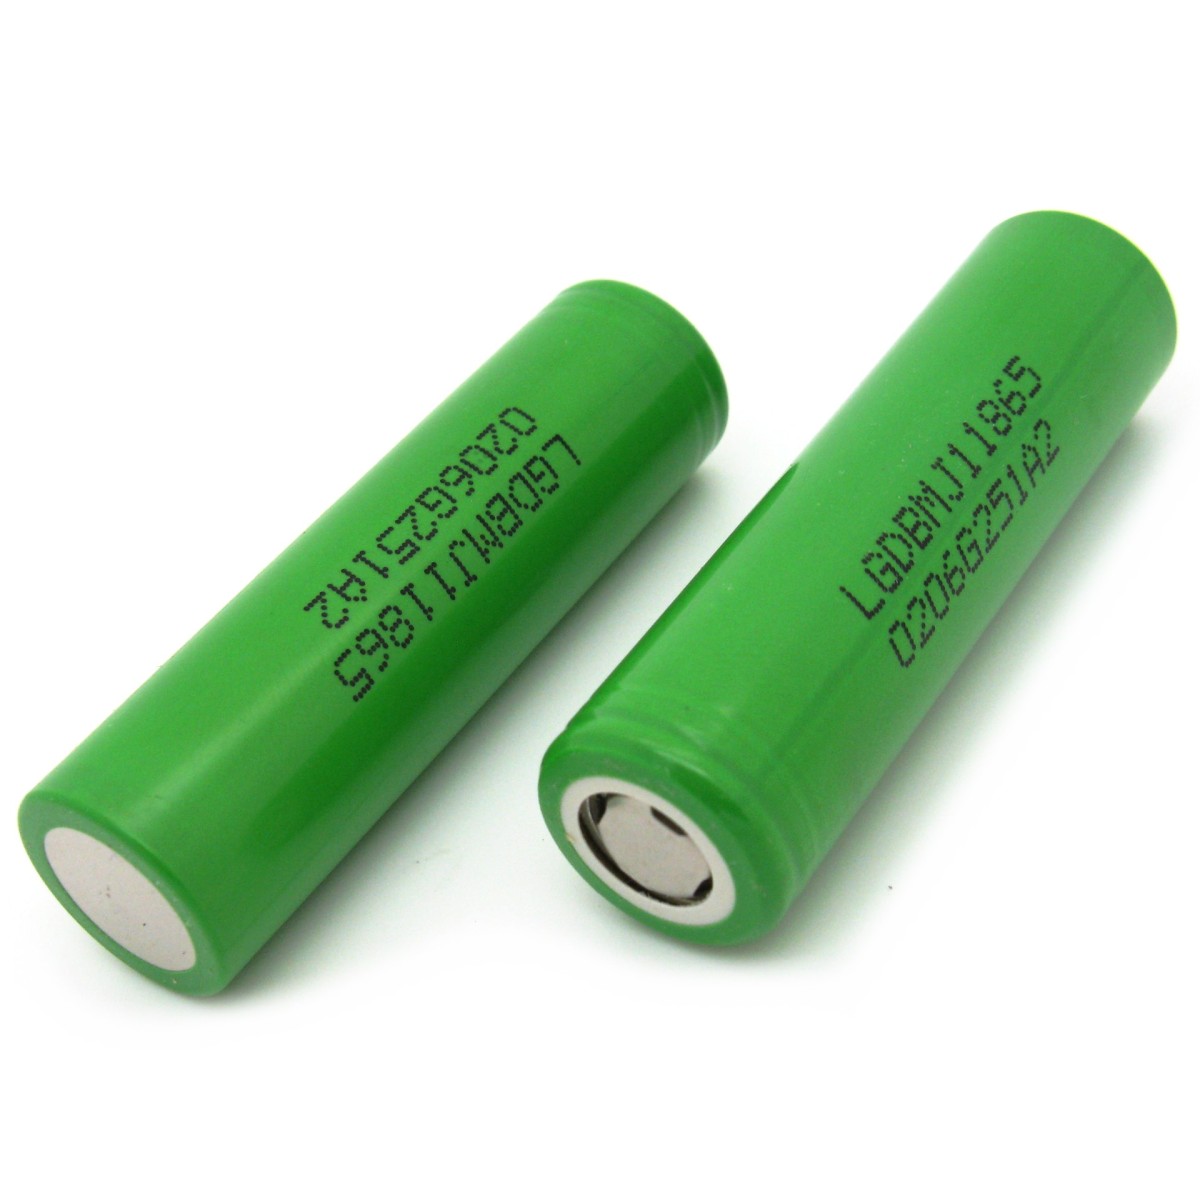 Rechargeable 18650 Battery, 3500mAh, 10A, LG MJ1 99Tech